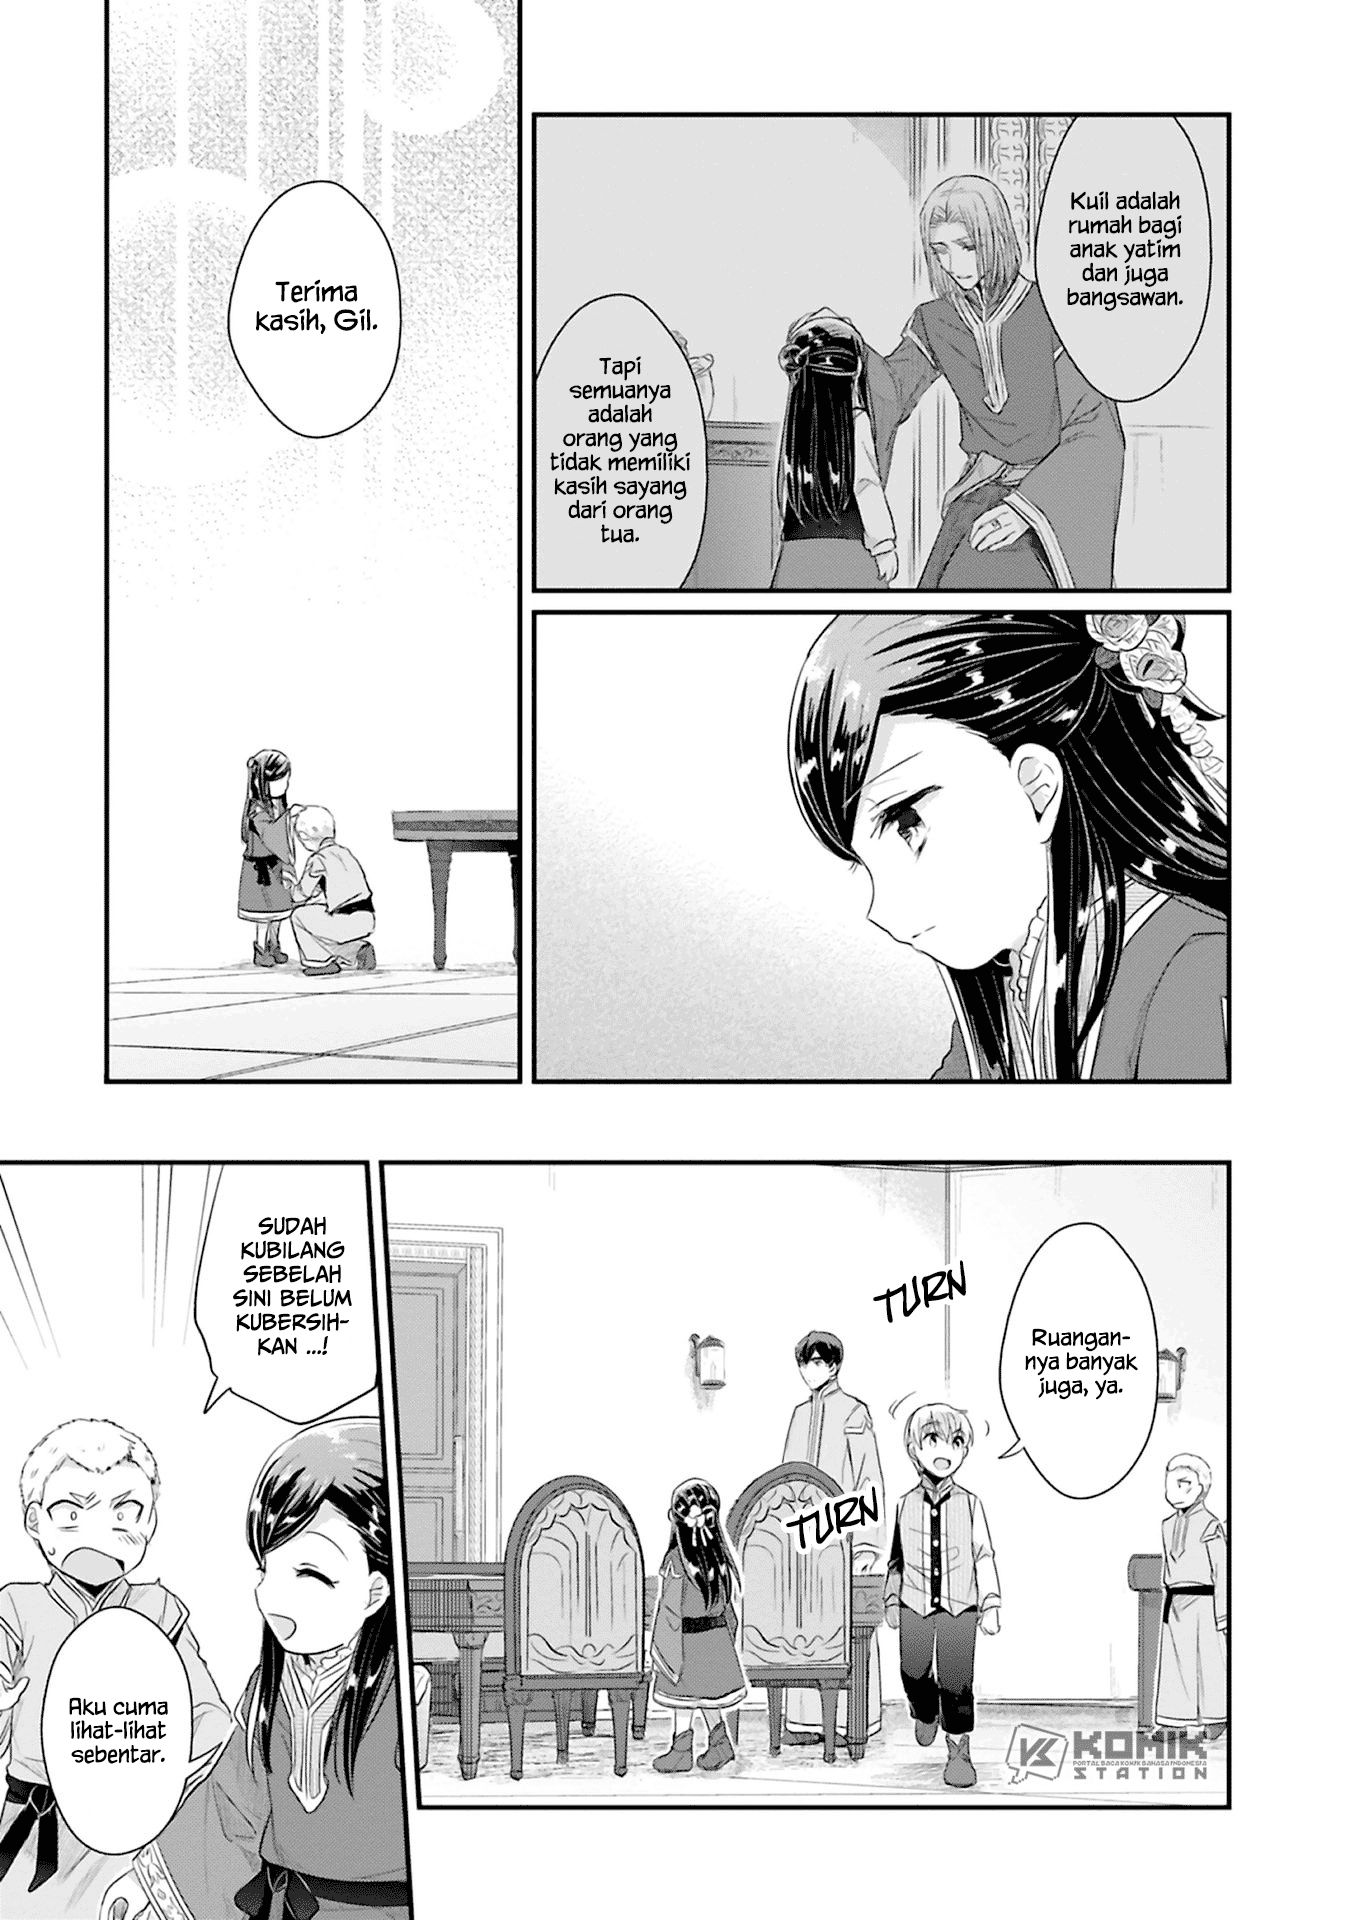 Honzuki no Gekokujou: Part 2 Chapter 5